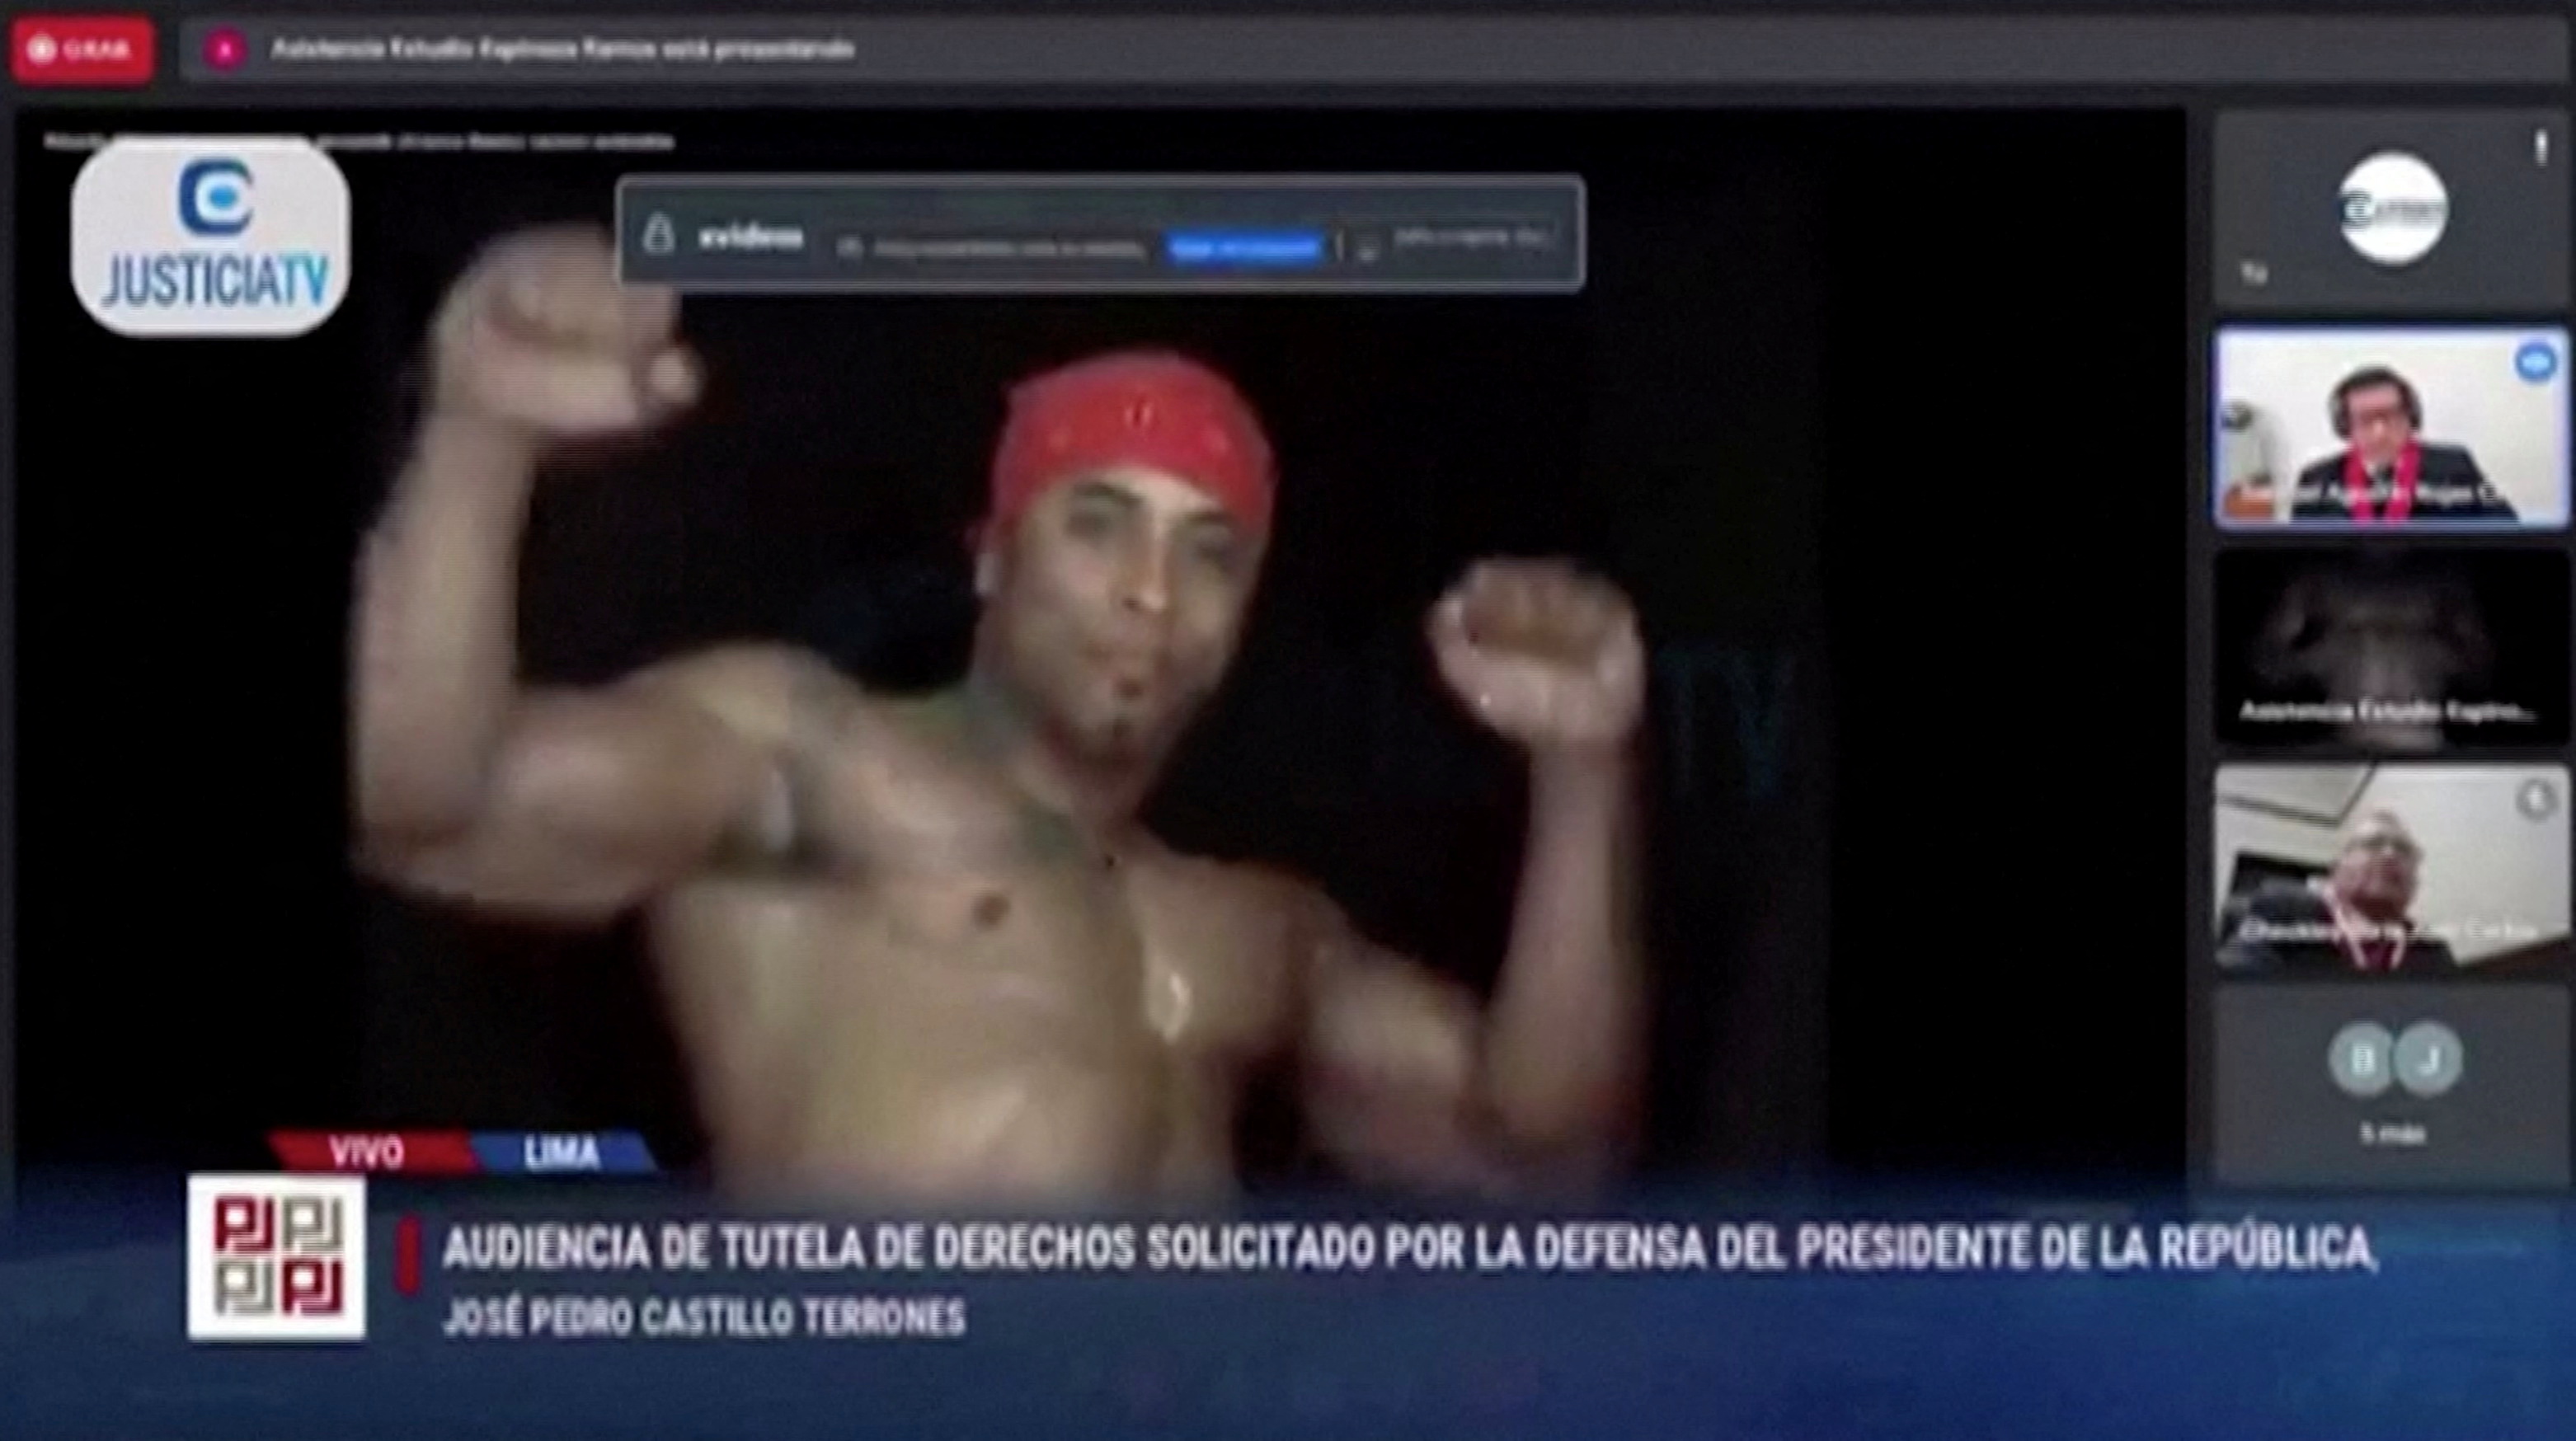 Brazilian stripper interrupts Peruvian president's online corruption hearing